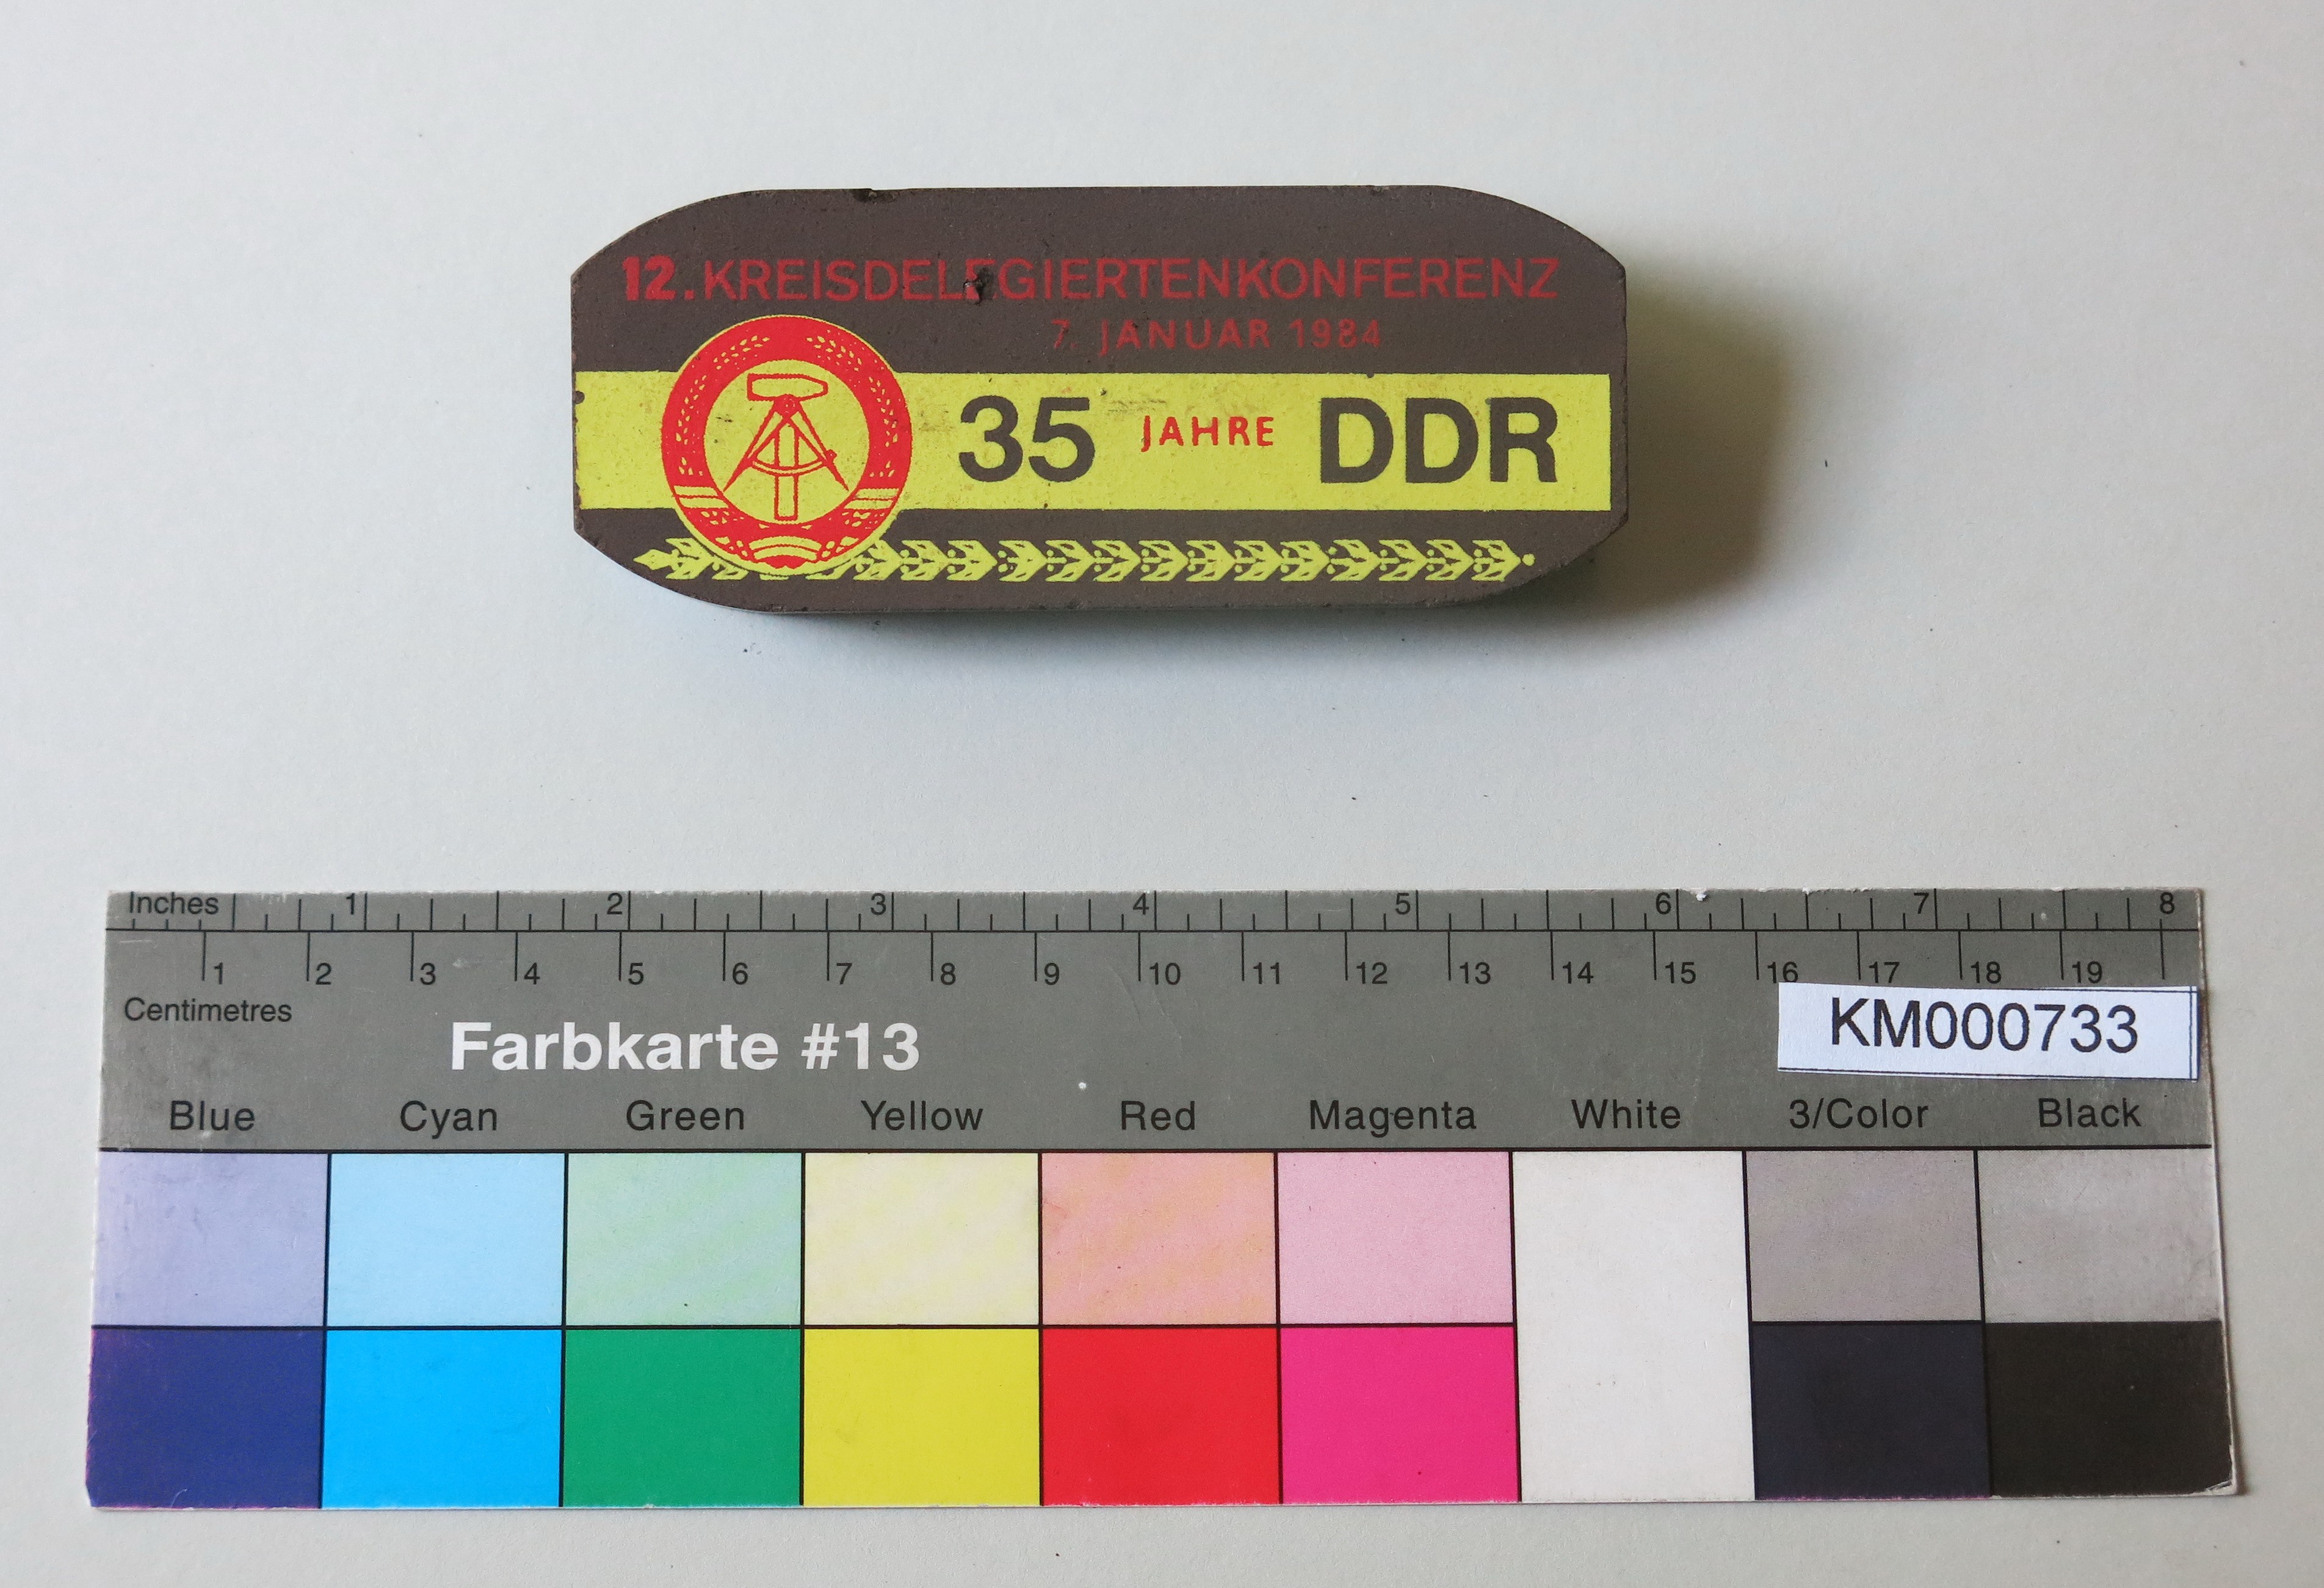 Zierbrikett "12. KREISDELEGIERTENKONFERENZ 7. JANUAR 1974 35 JAHRE DDR" (Energiefabrik Knappenrode CC BY-SA)